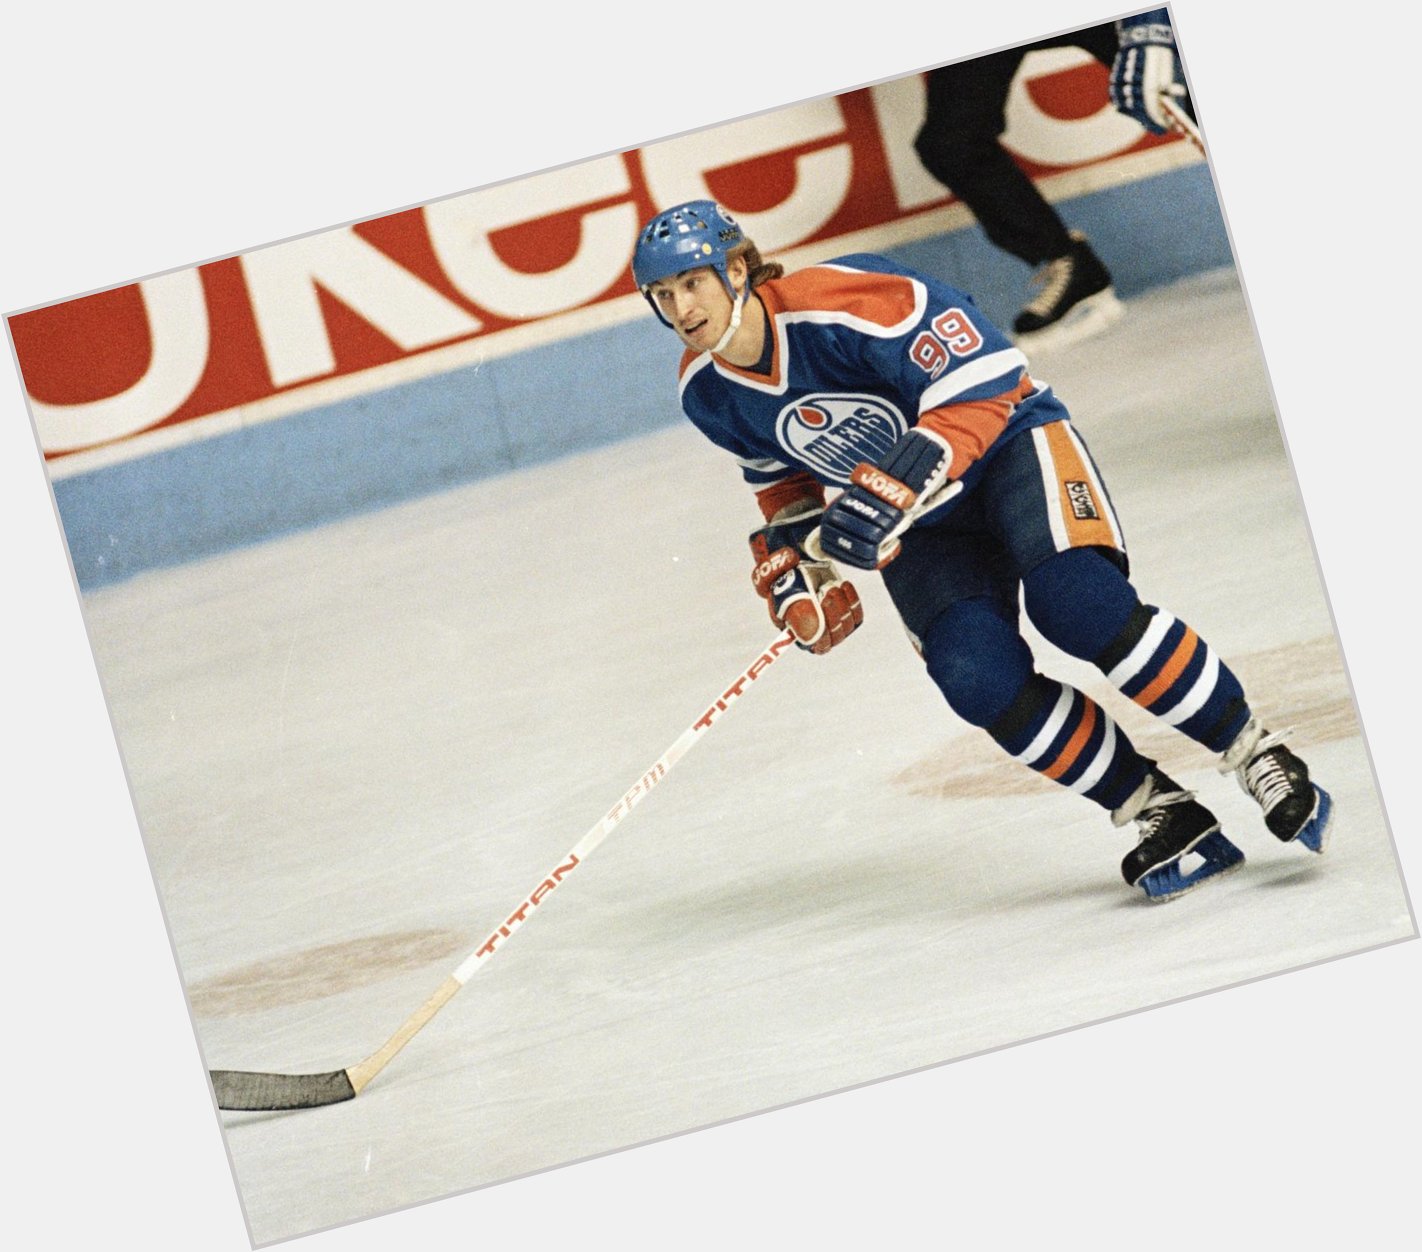 Happy Birthday to the Great One, Wayne Gretzky, turns 54 today! 